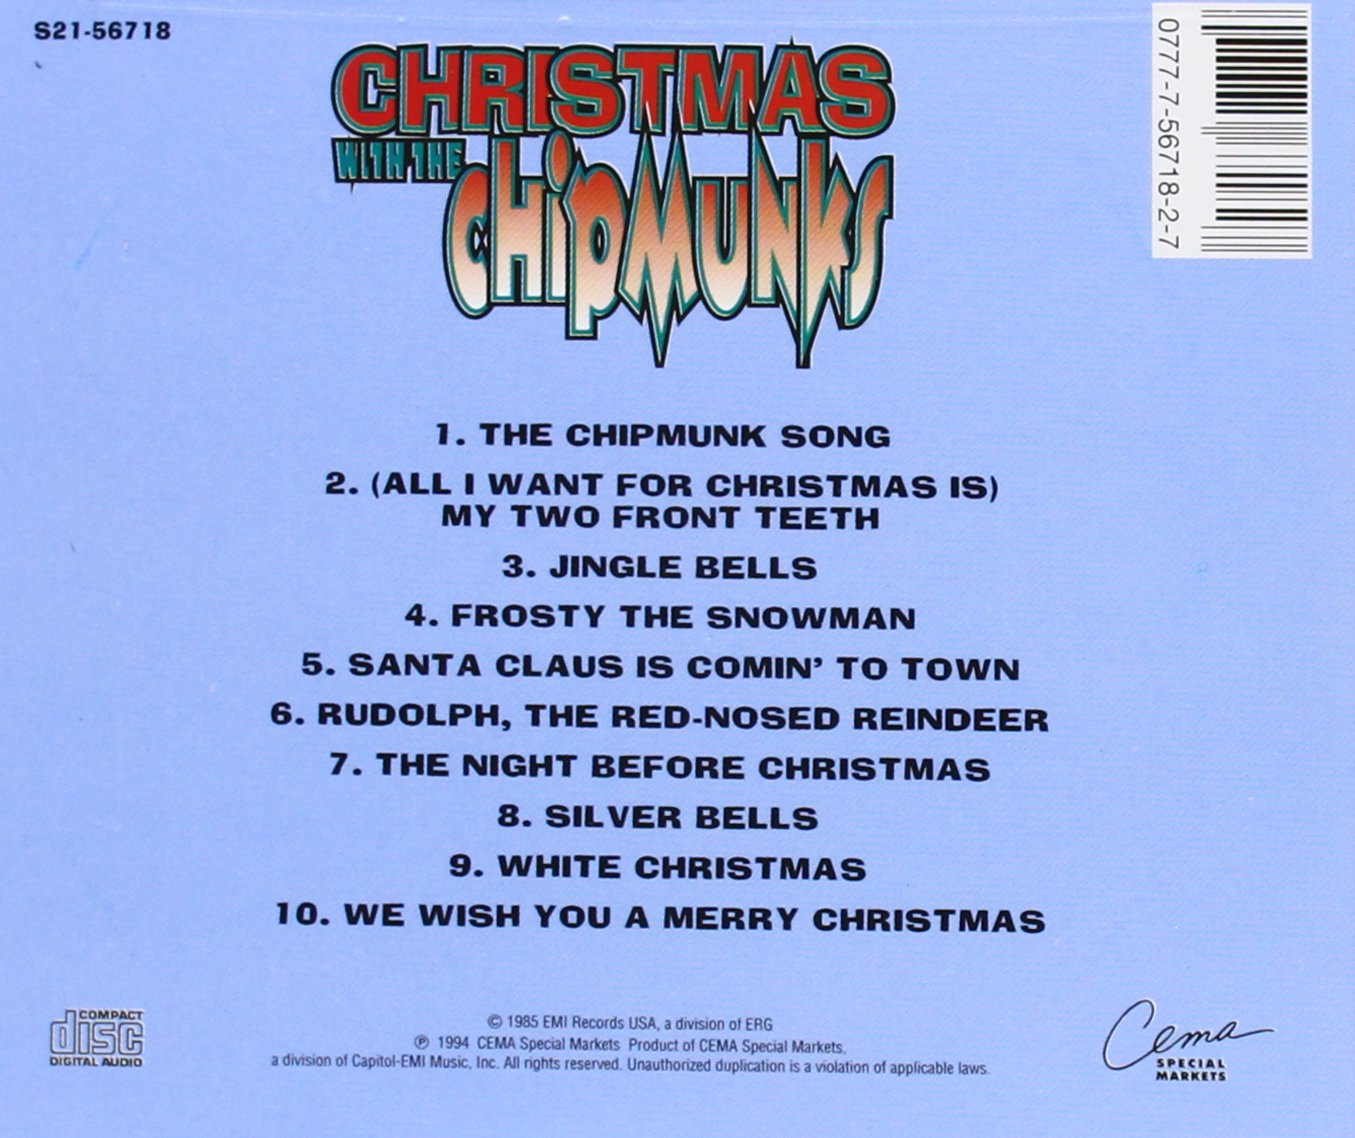 CHIPMUNKS: Christmas With The Chipmunks